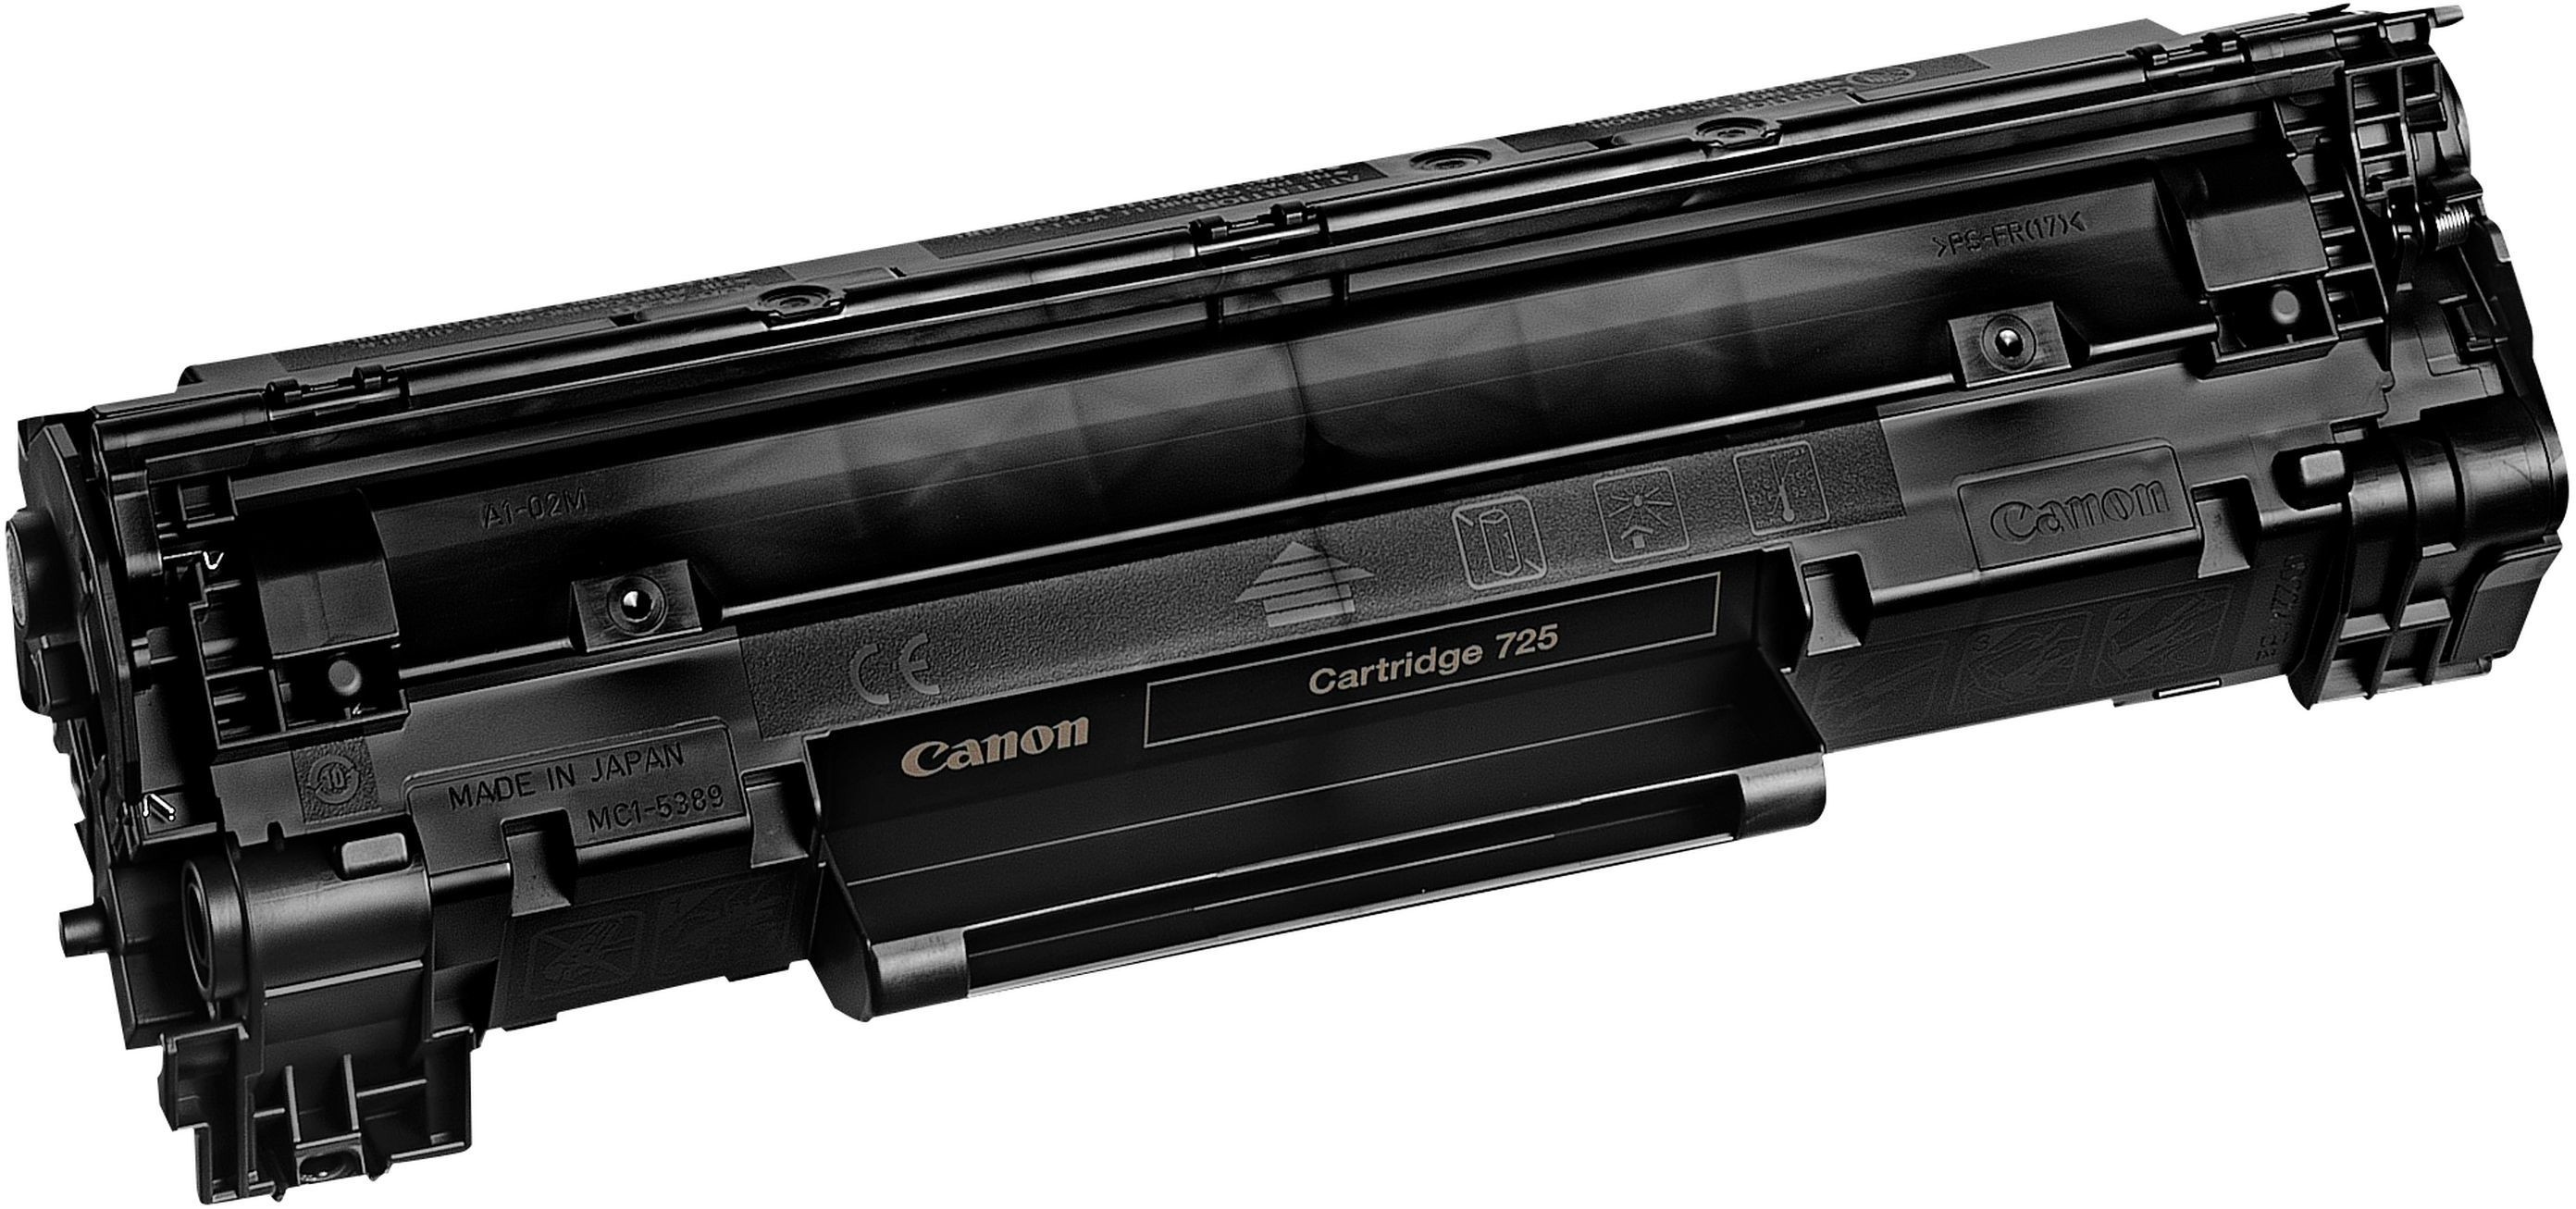 Canon cartridge 725. Canon Cartridge 725h. Картридж Canon Cartridge 725. Canon 725 3484b002. Картридж Canon 725 (3484b005).